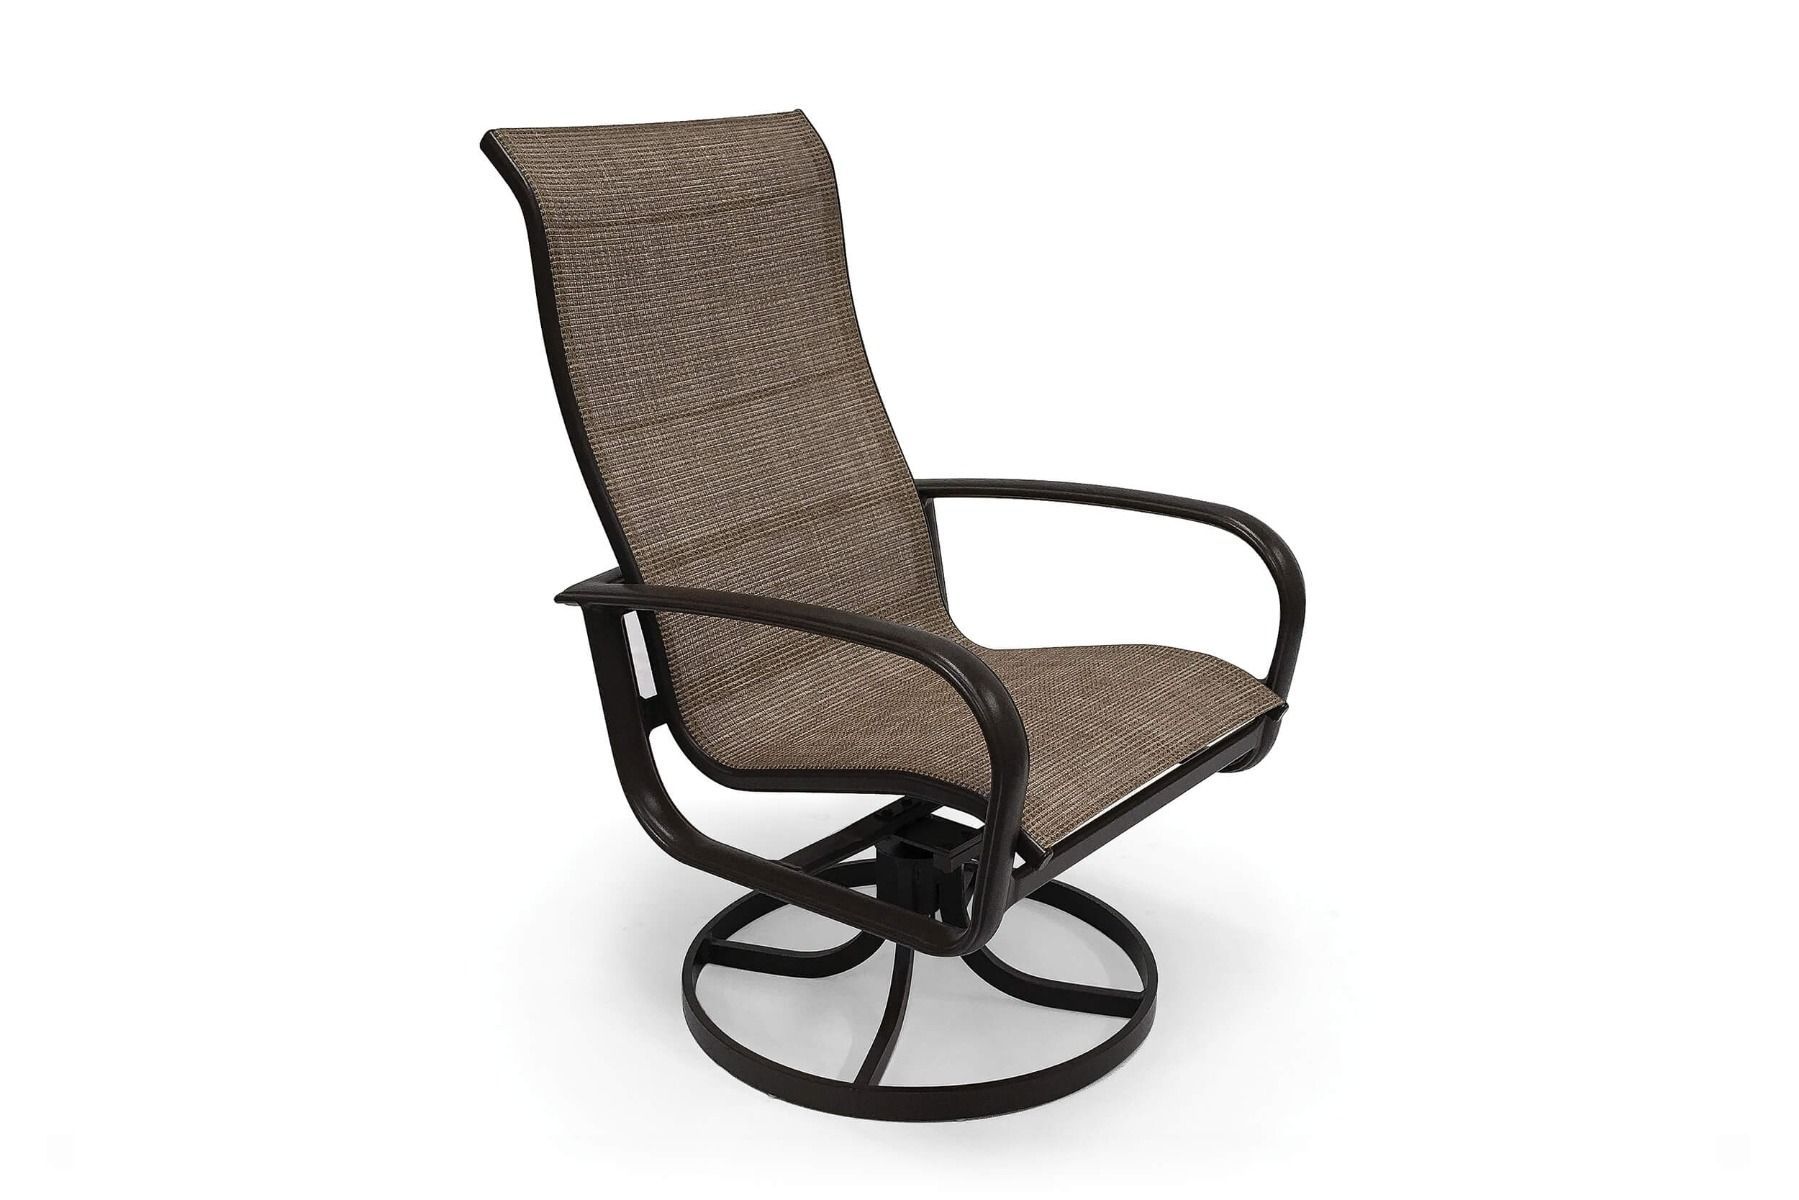 Savoy Sling High Back Swivel Tilt Chat Chair (2Pk) Regarding Padded Sling High Back Swivel Chairs (View 25 of 25)